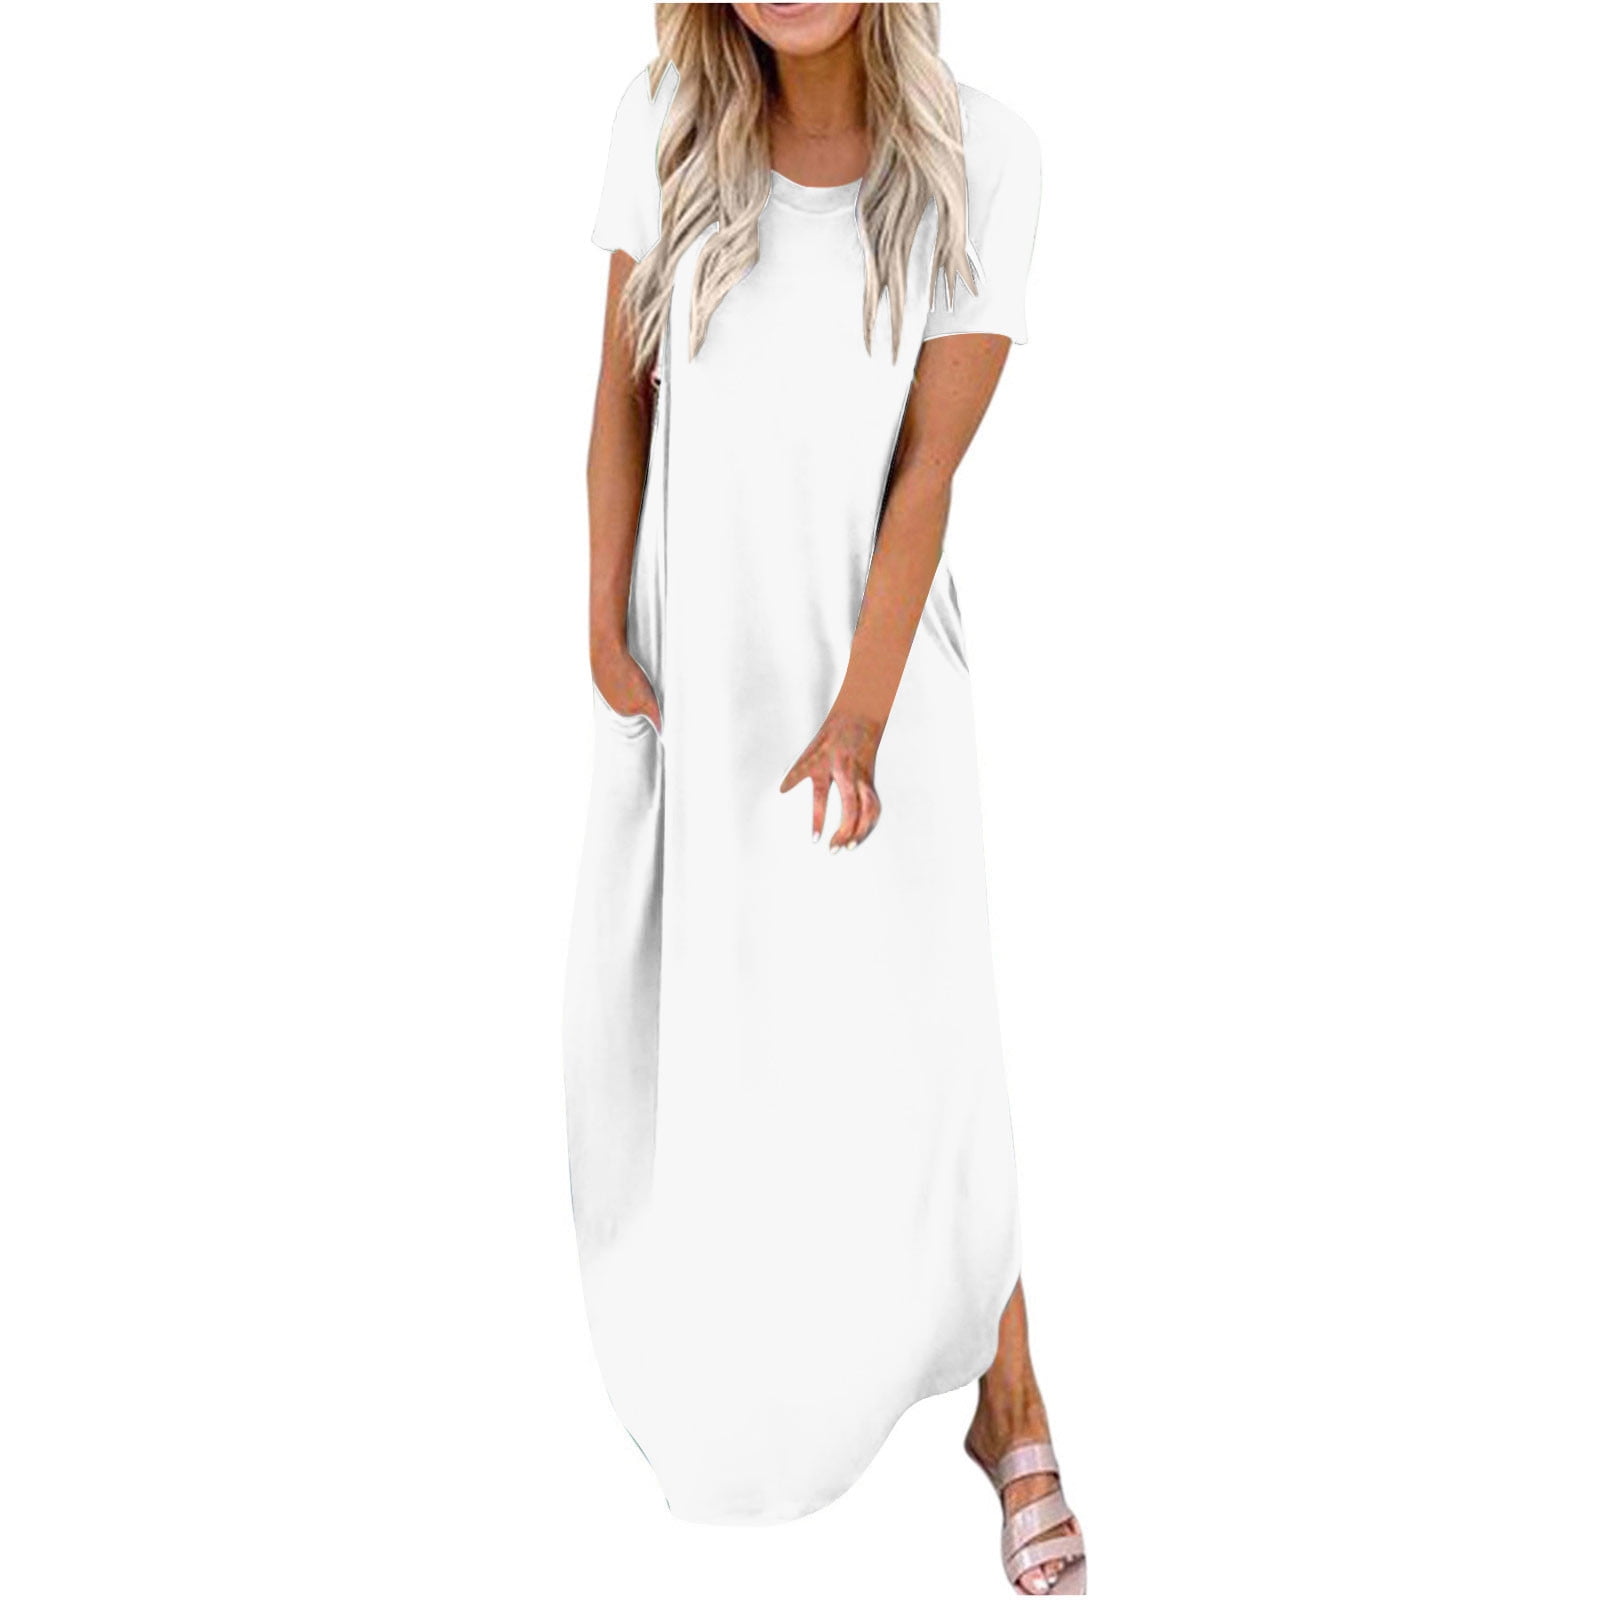 Short White Dress, Cotton Dress, Women Tops